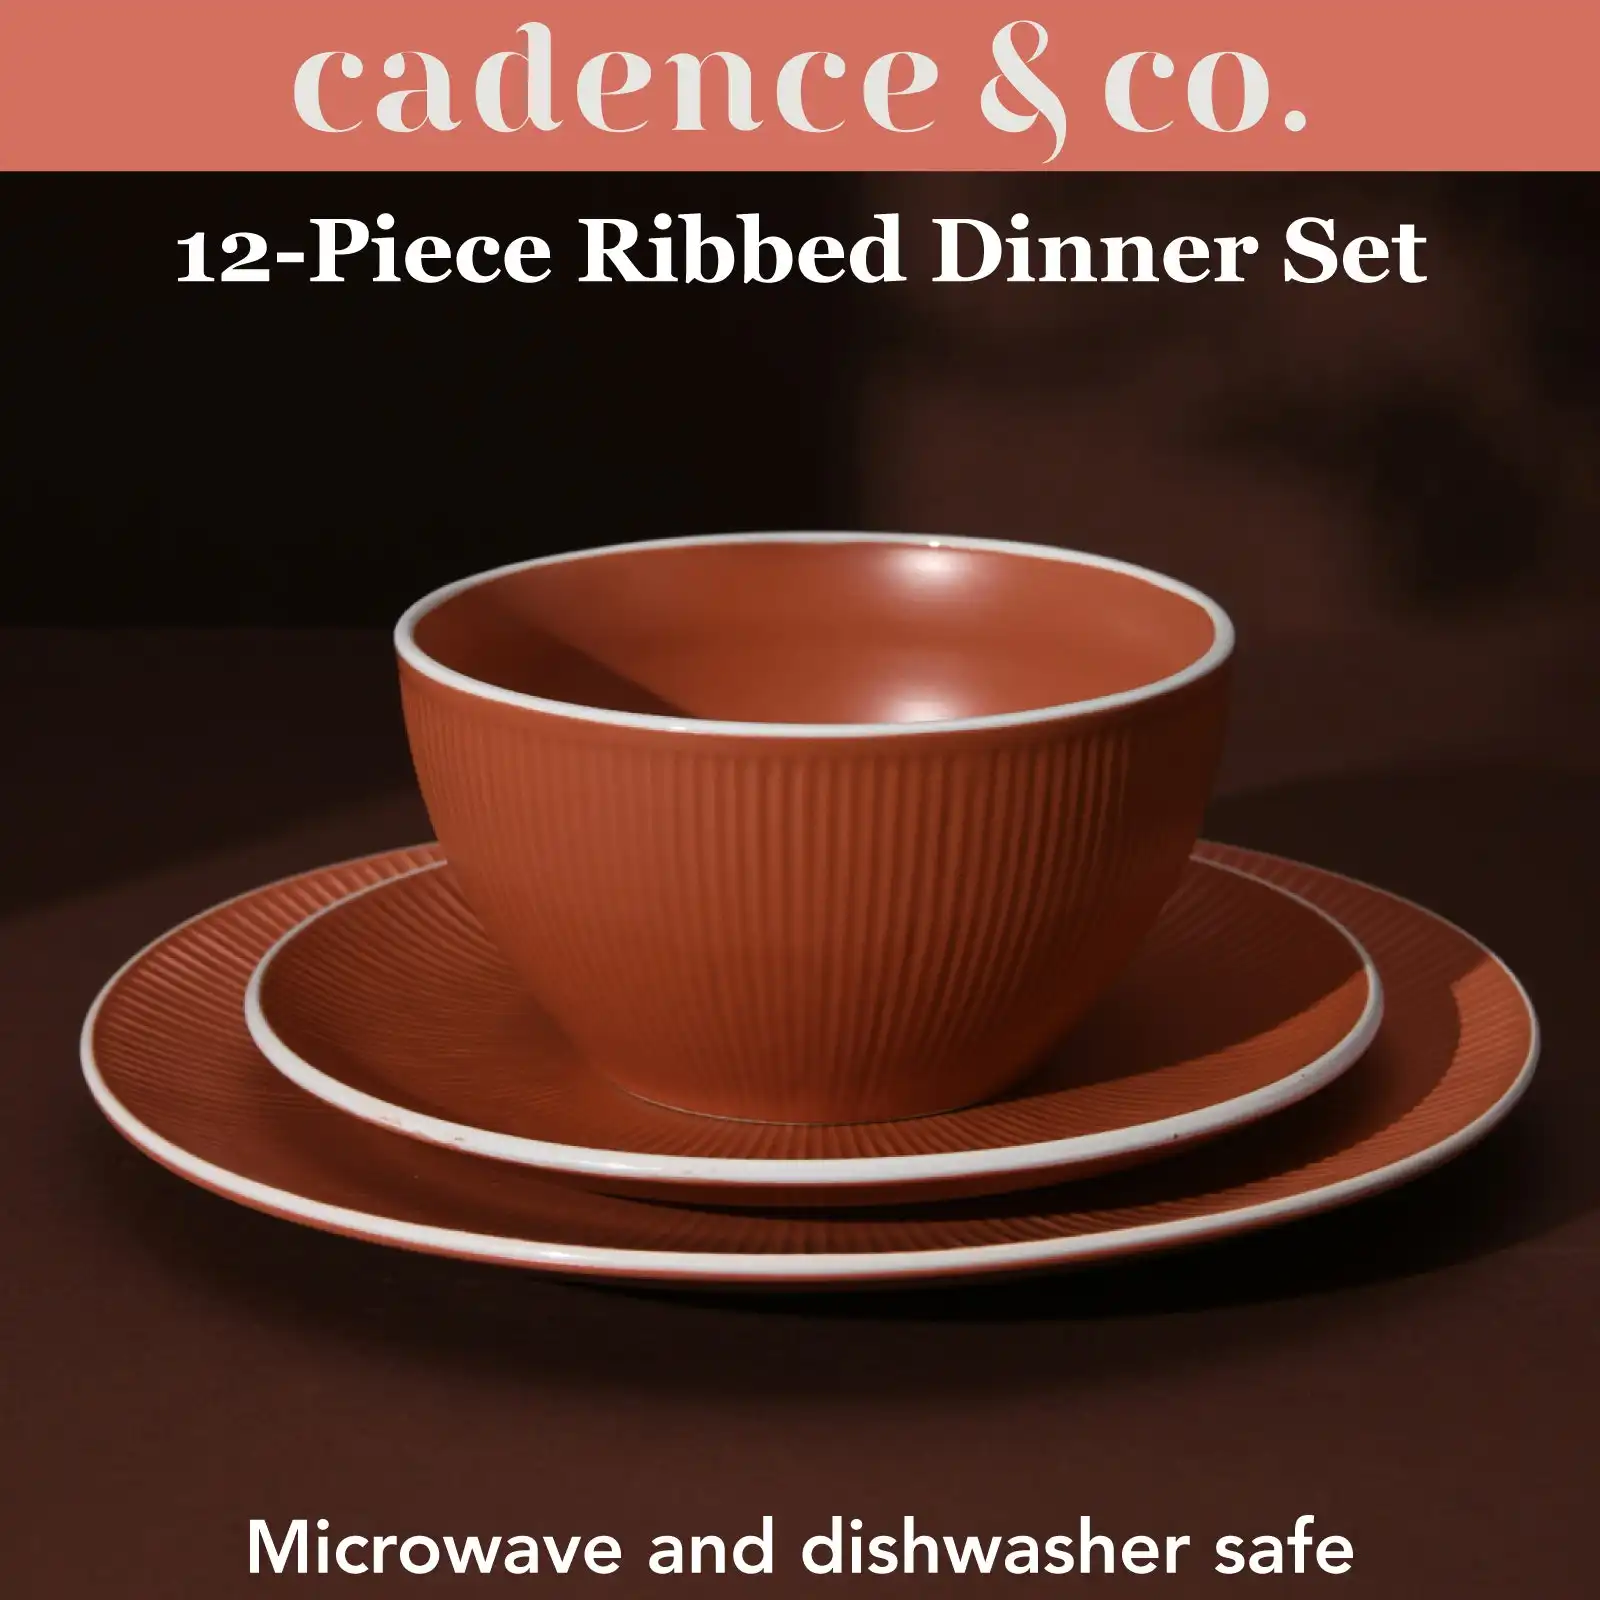 Cadence & Co. Maze 12-Piece Ribbed Dinner Set Matte Glaze Terracotta/White 4 person